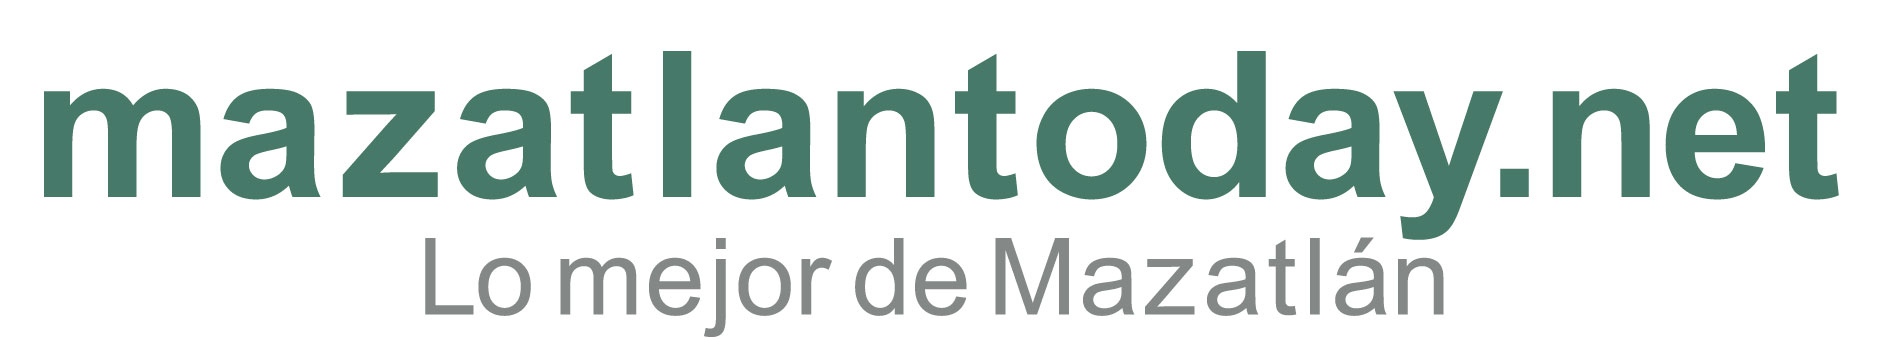 Maraton Mazatlan 2022 | mazatlantoday.net presentación de guía de viaje 2022 | INICIO